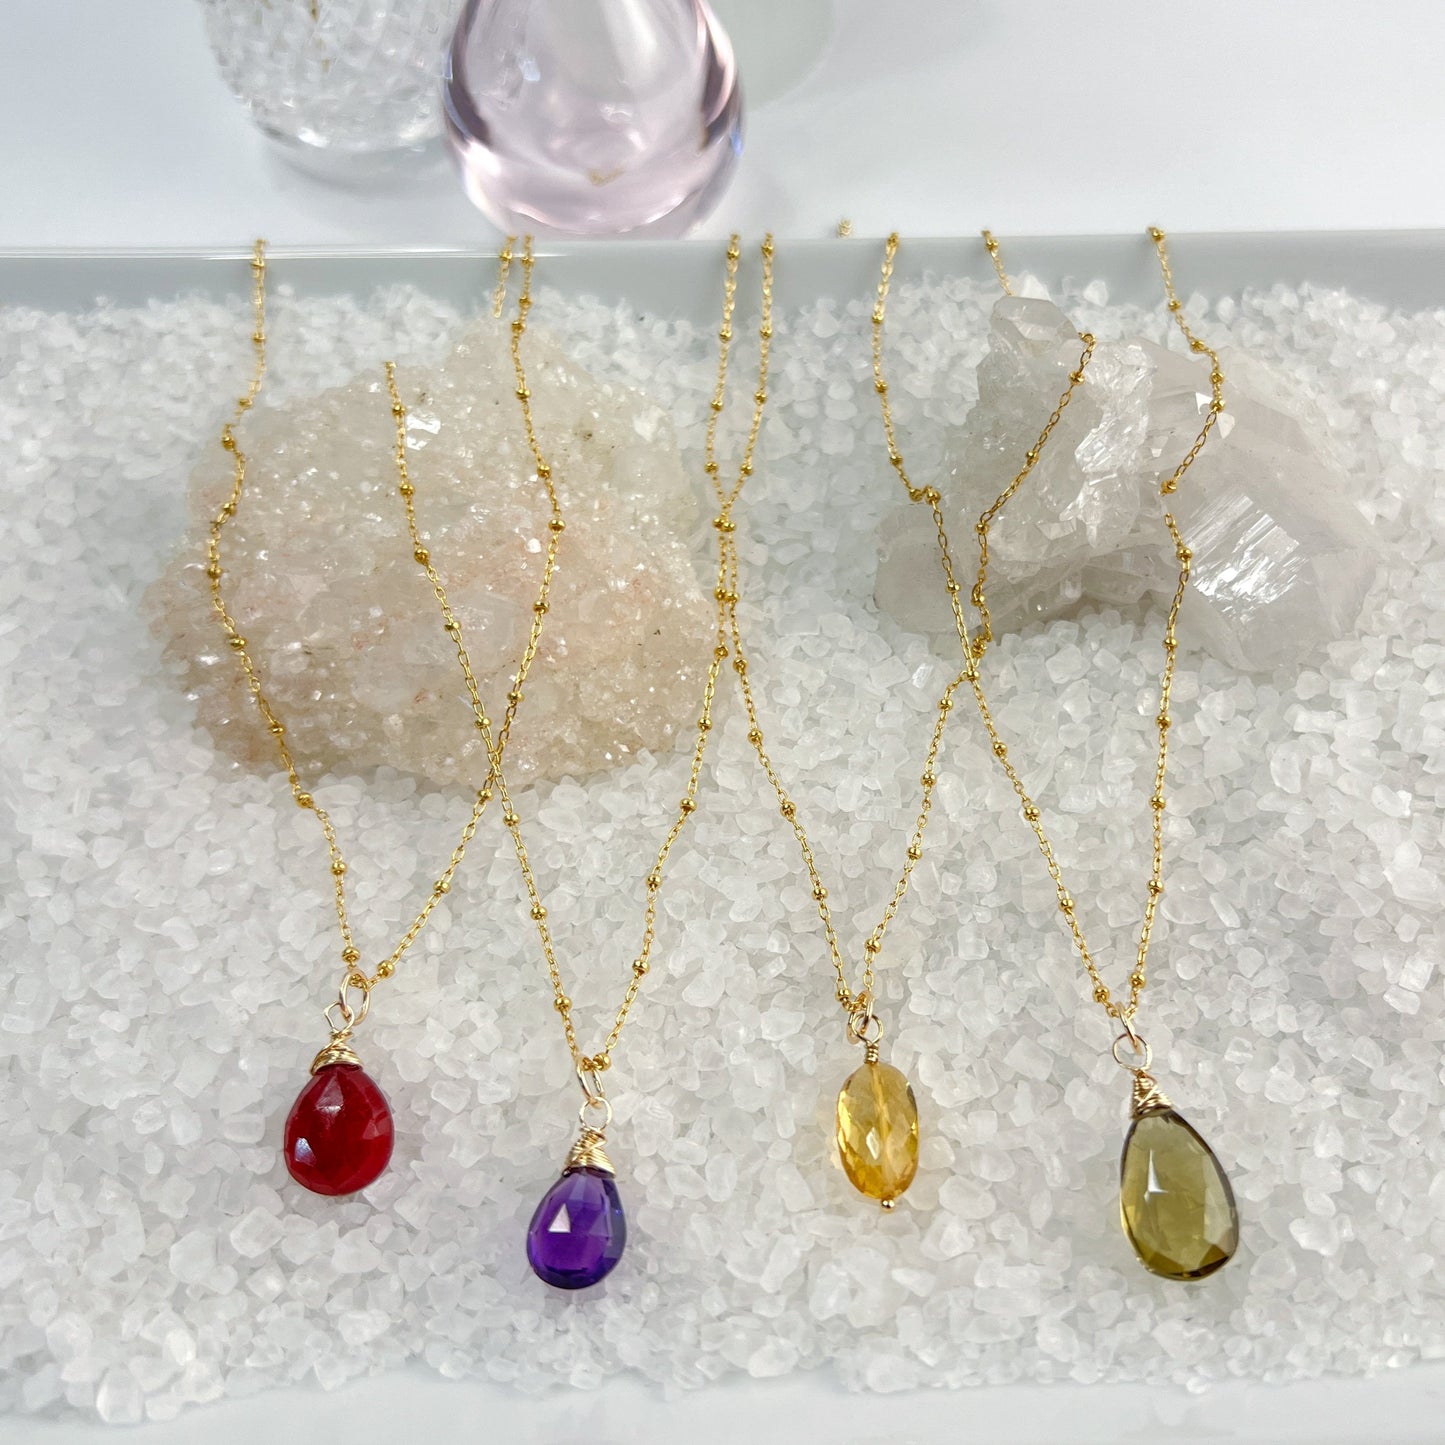 Ruby, Amethyst, Citrine, Olive quartz necklaces